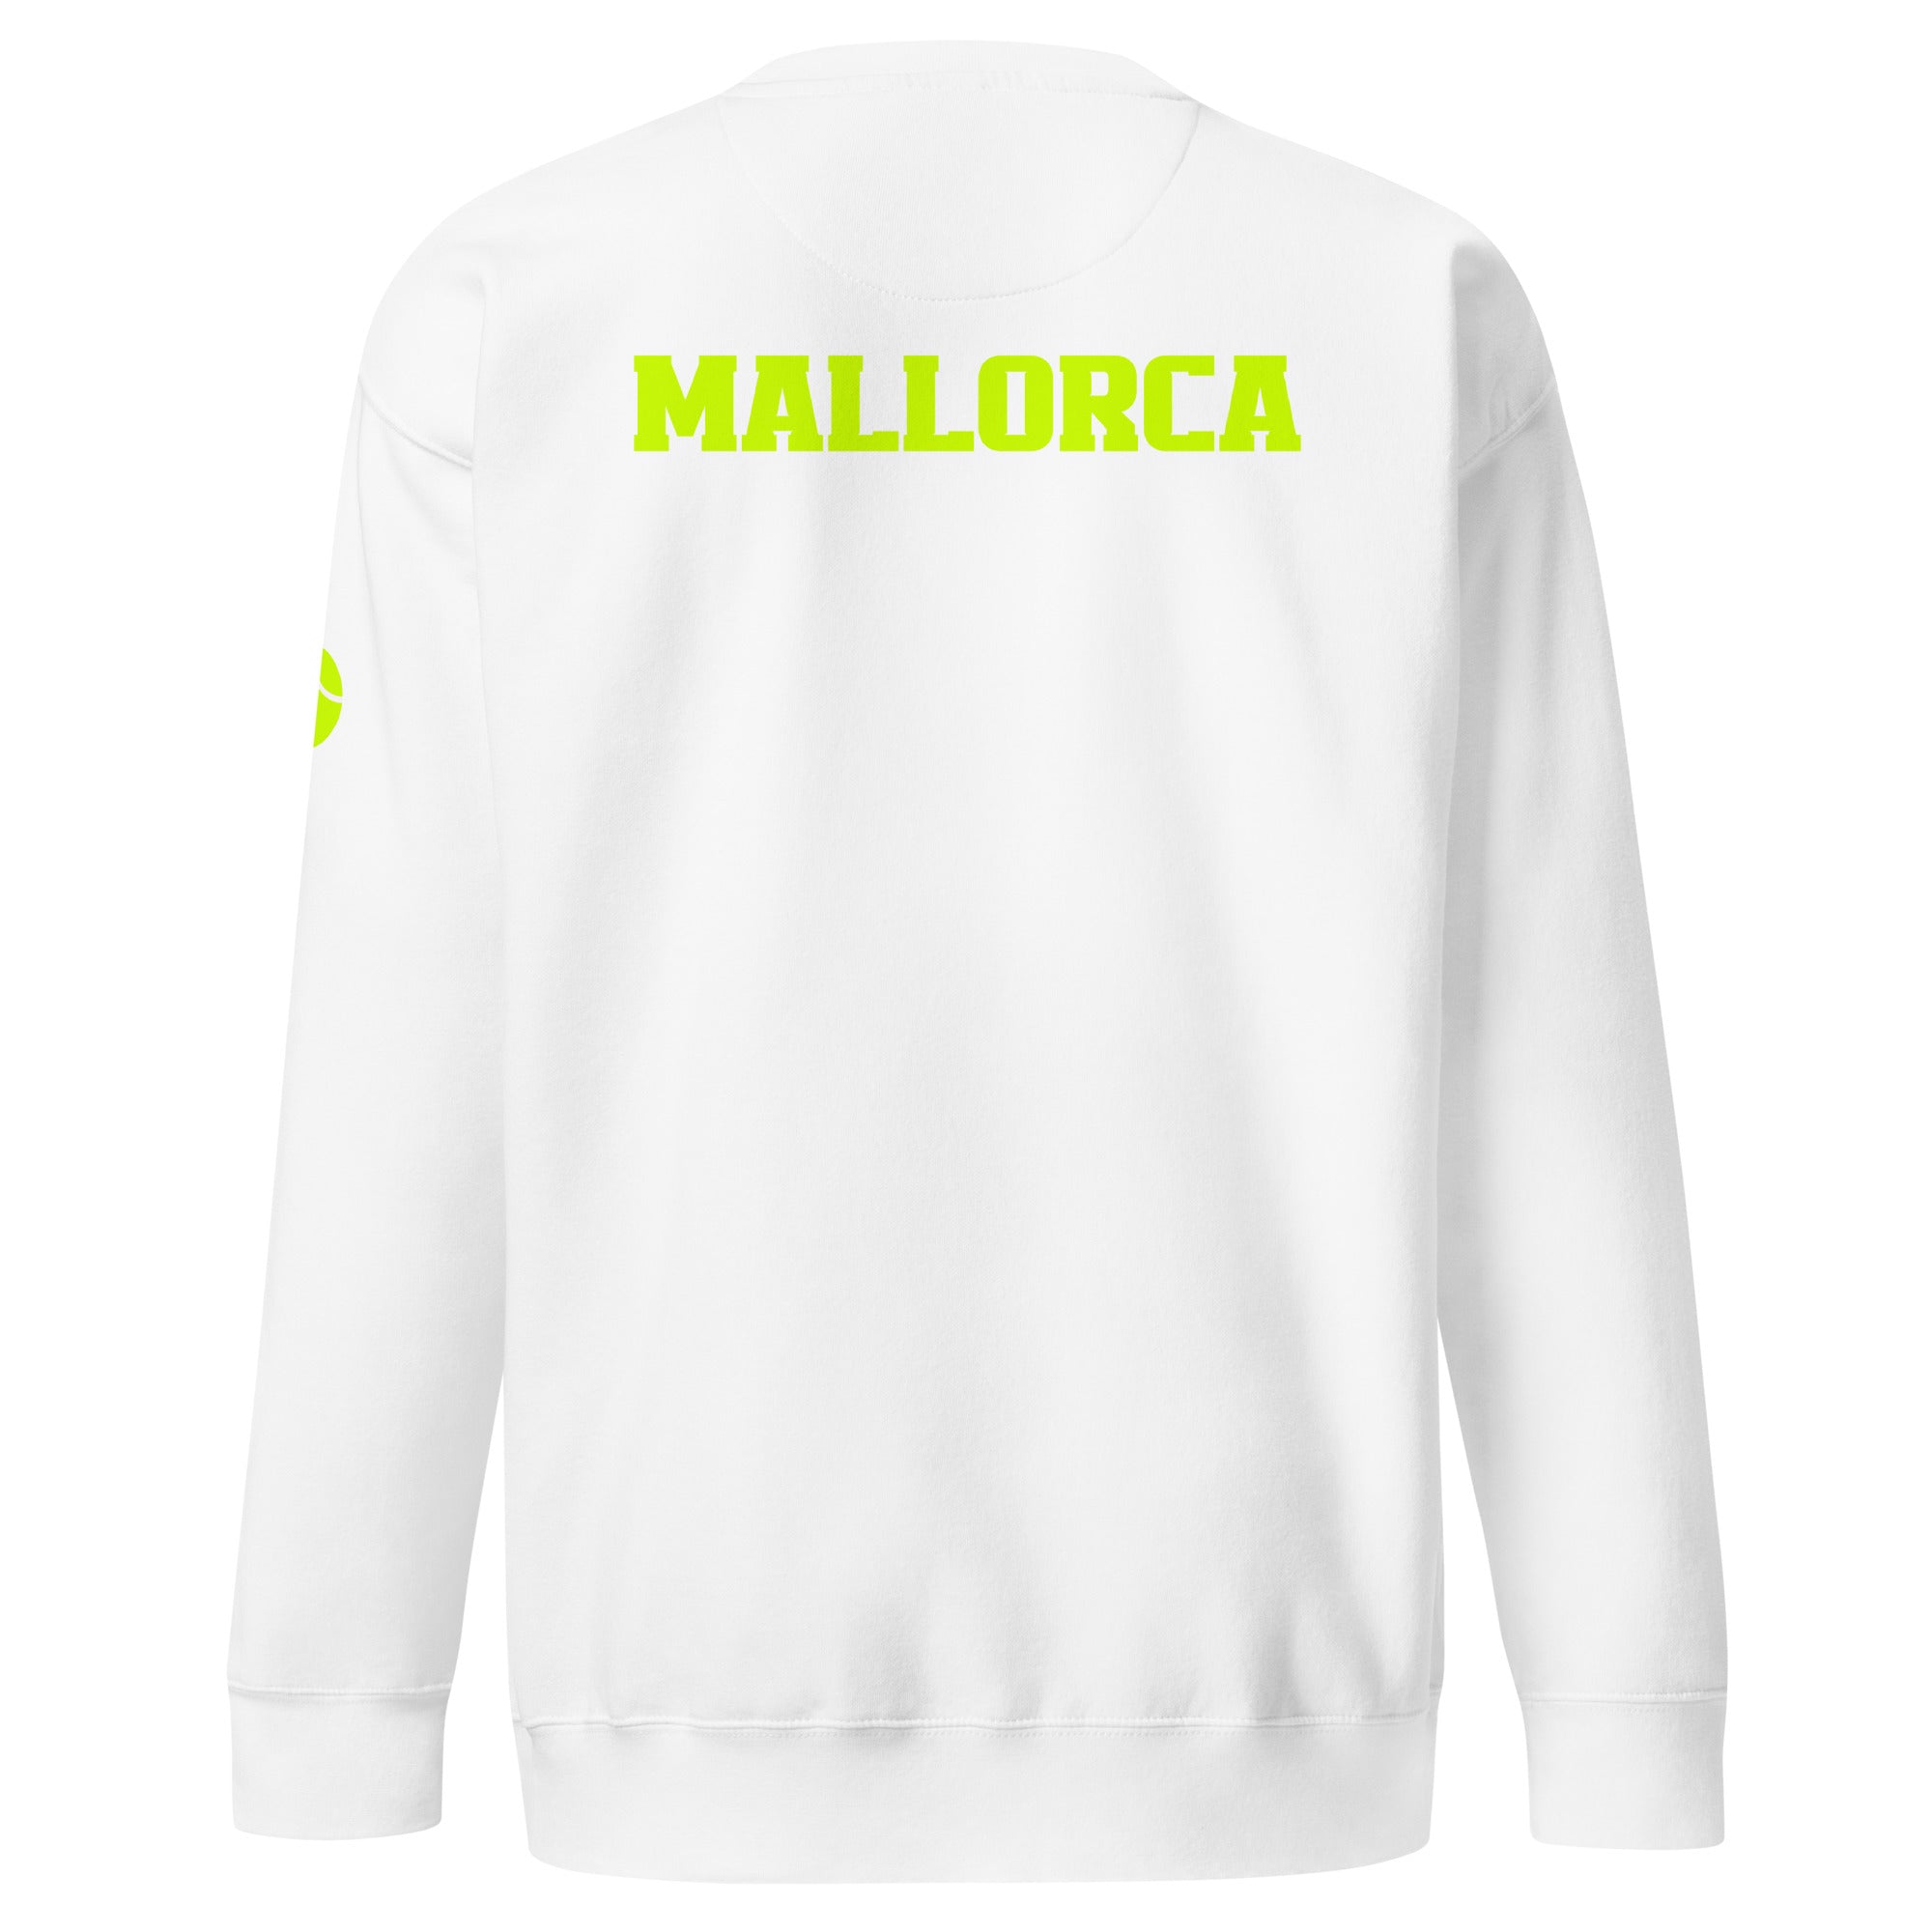 Unisex Premium Sweatshirt - Tennis Masters Mallorca - GRAPHIC T-SHIRTS